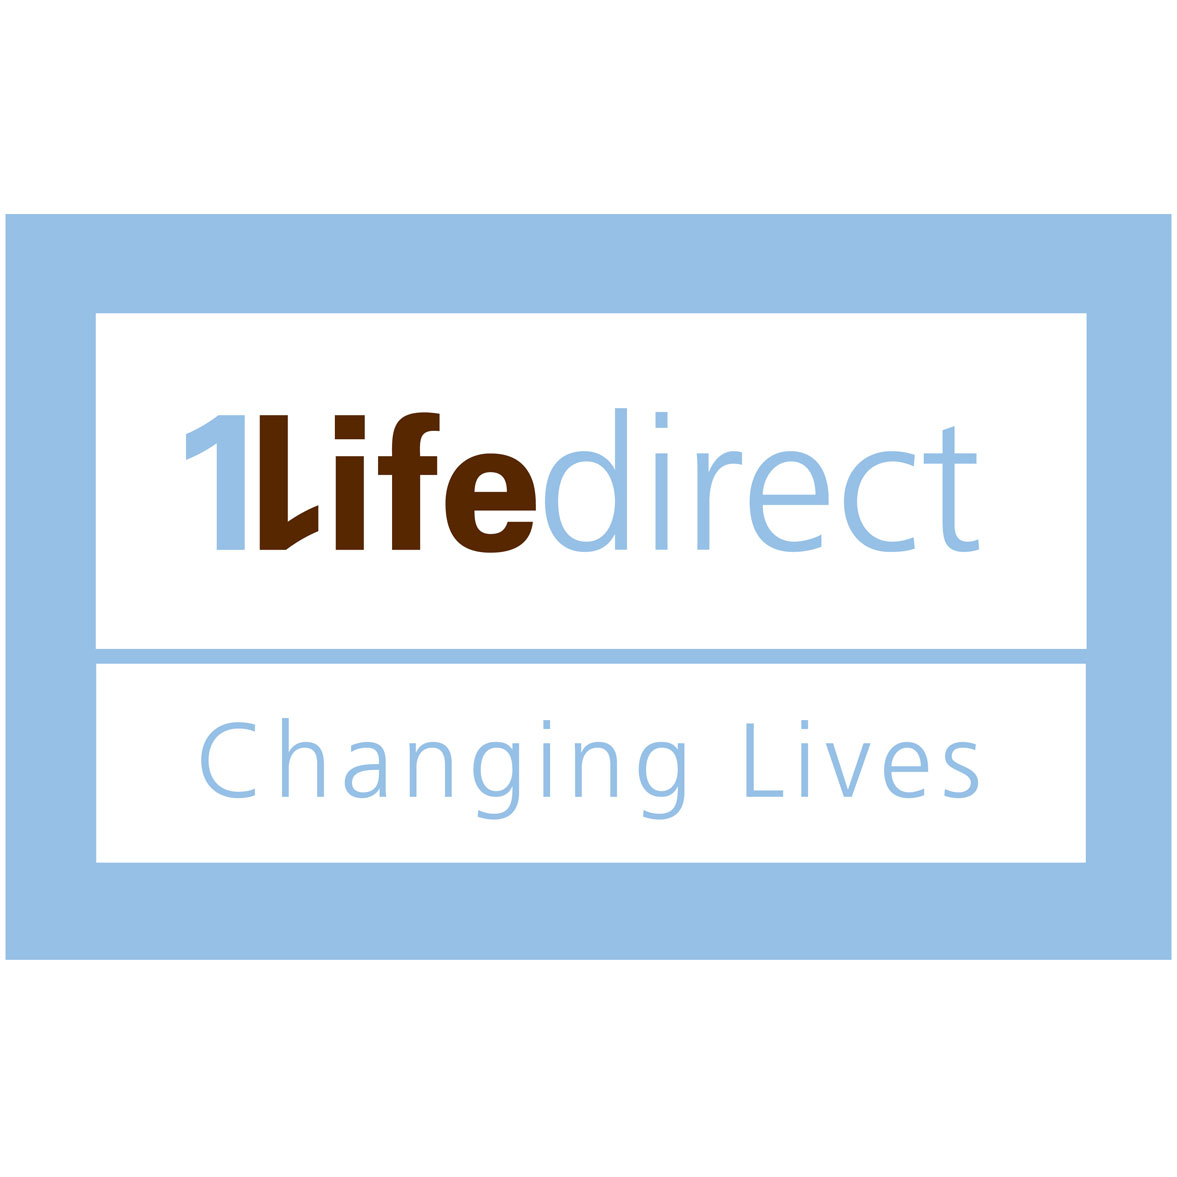 1life-direct-logo